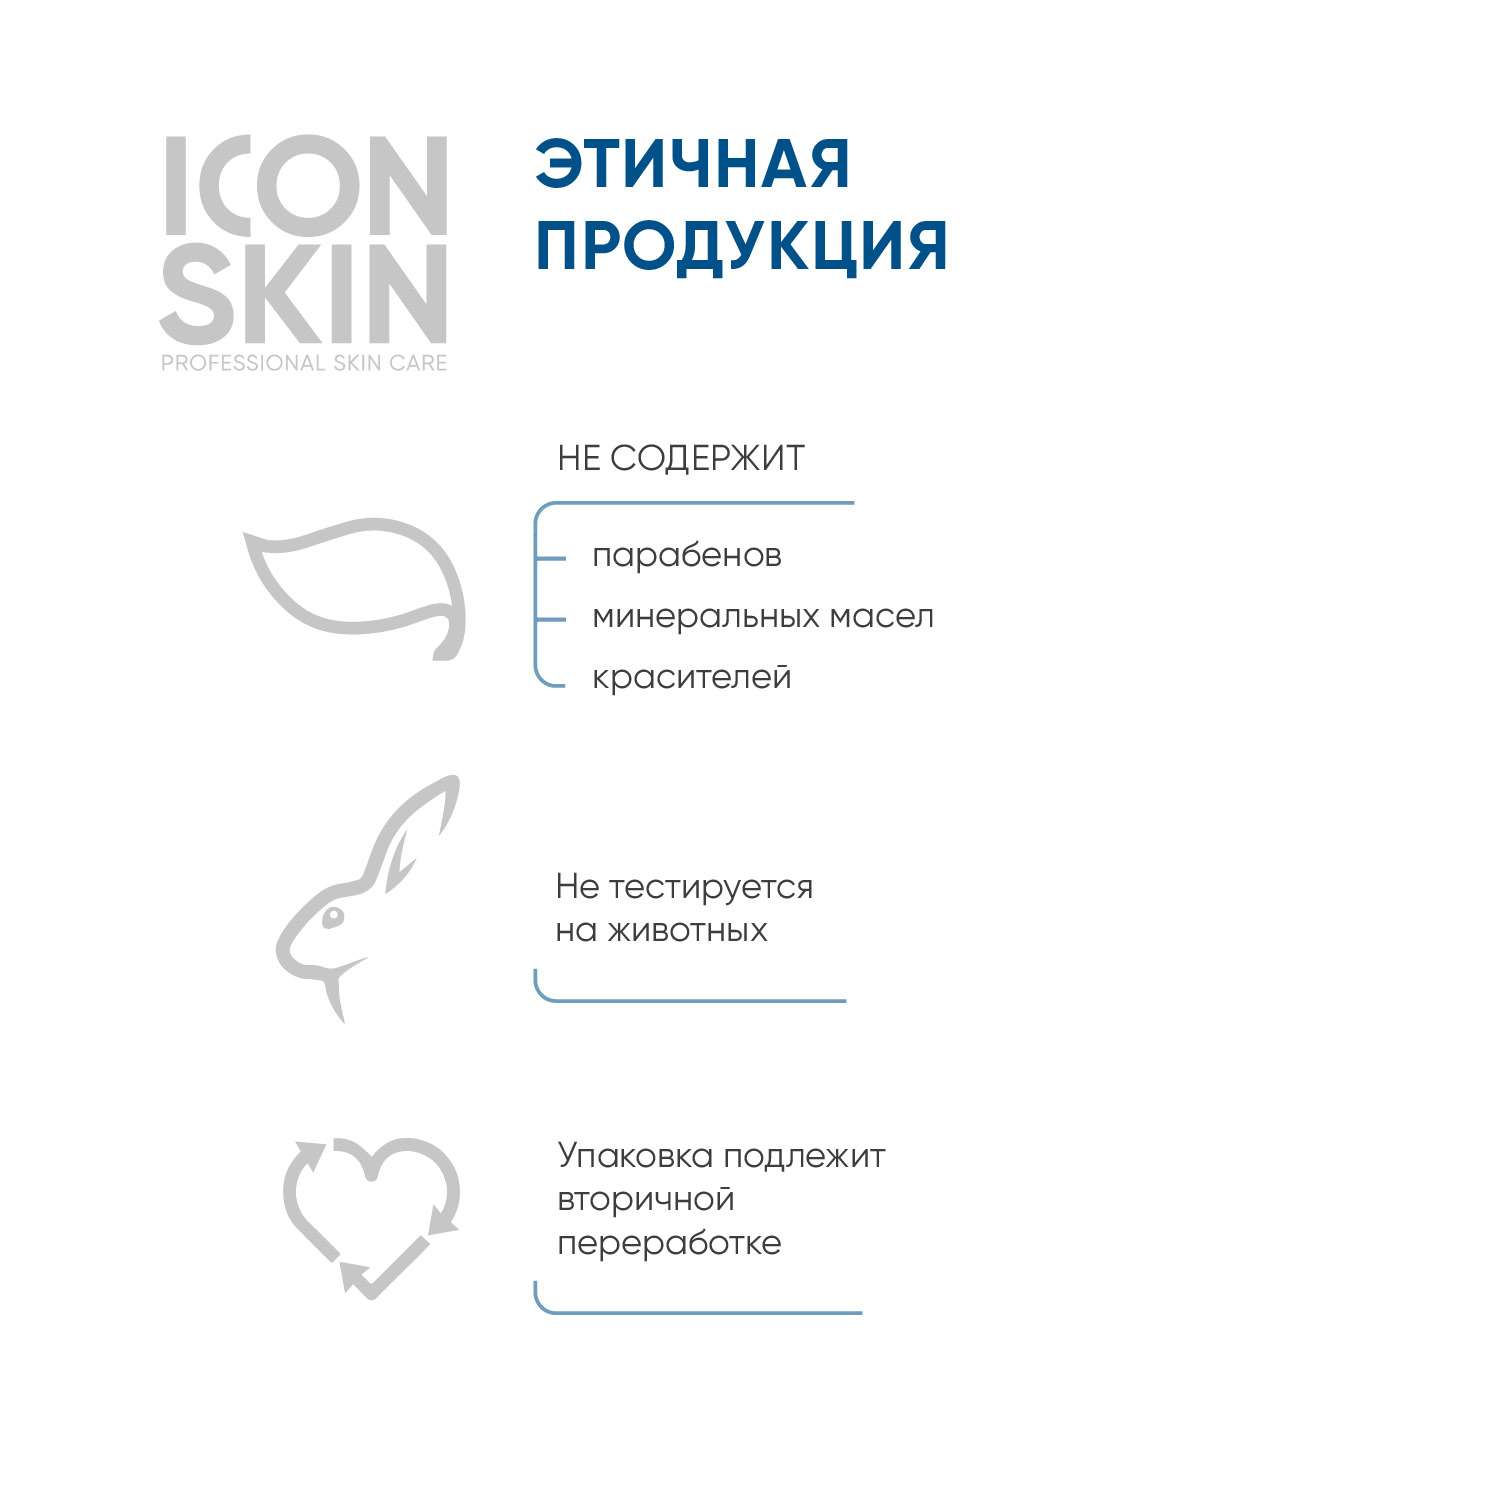 Тоник ICON SKIN очищающий активатор ultra skin 150 мл - фото 8